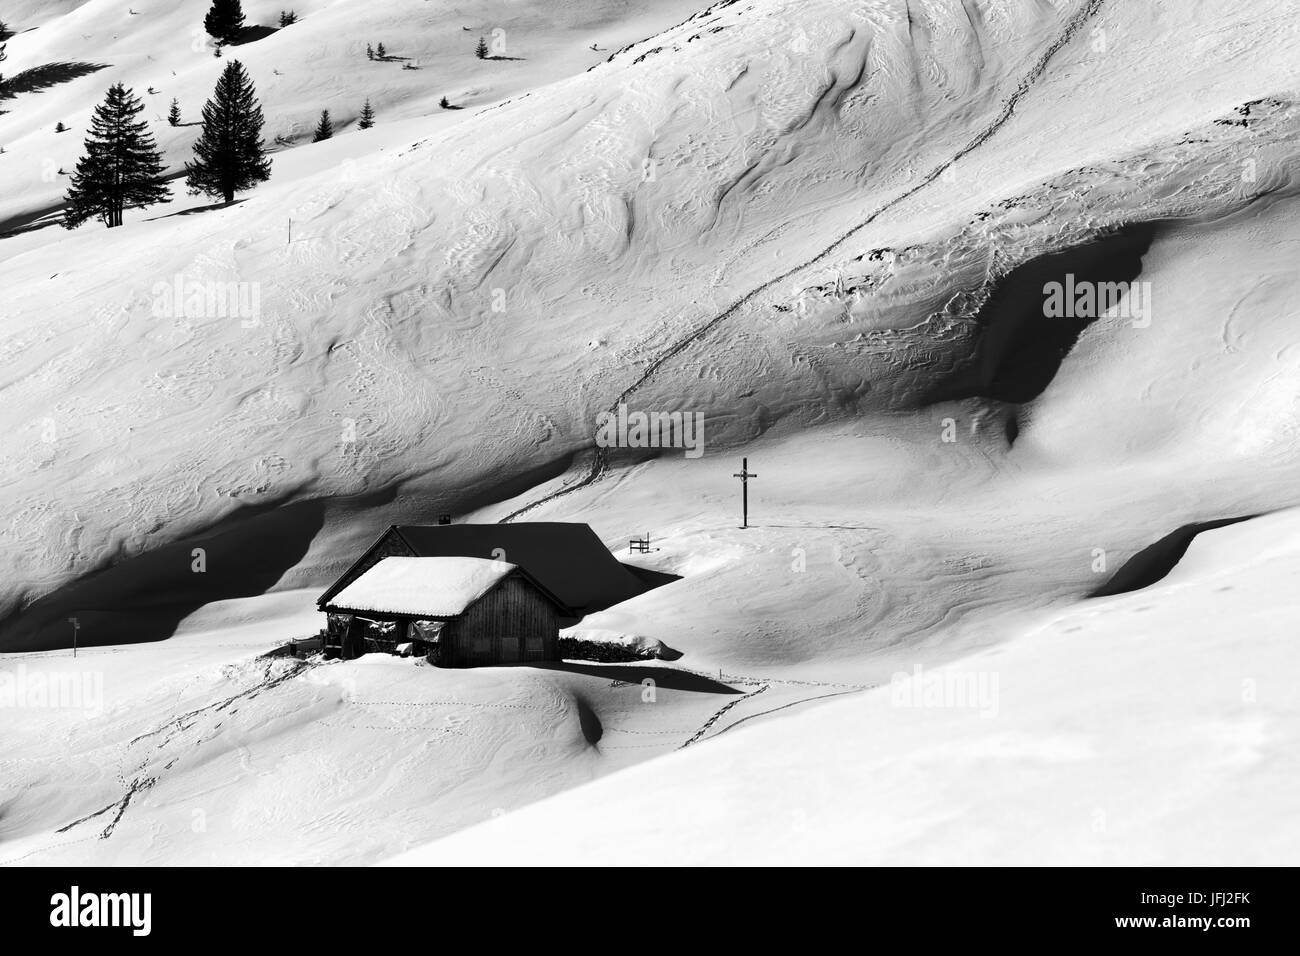 Kugel Alp in winter Stock Photo